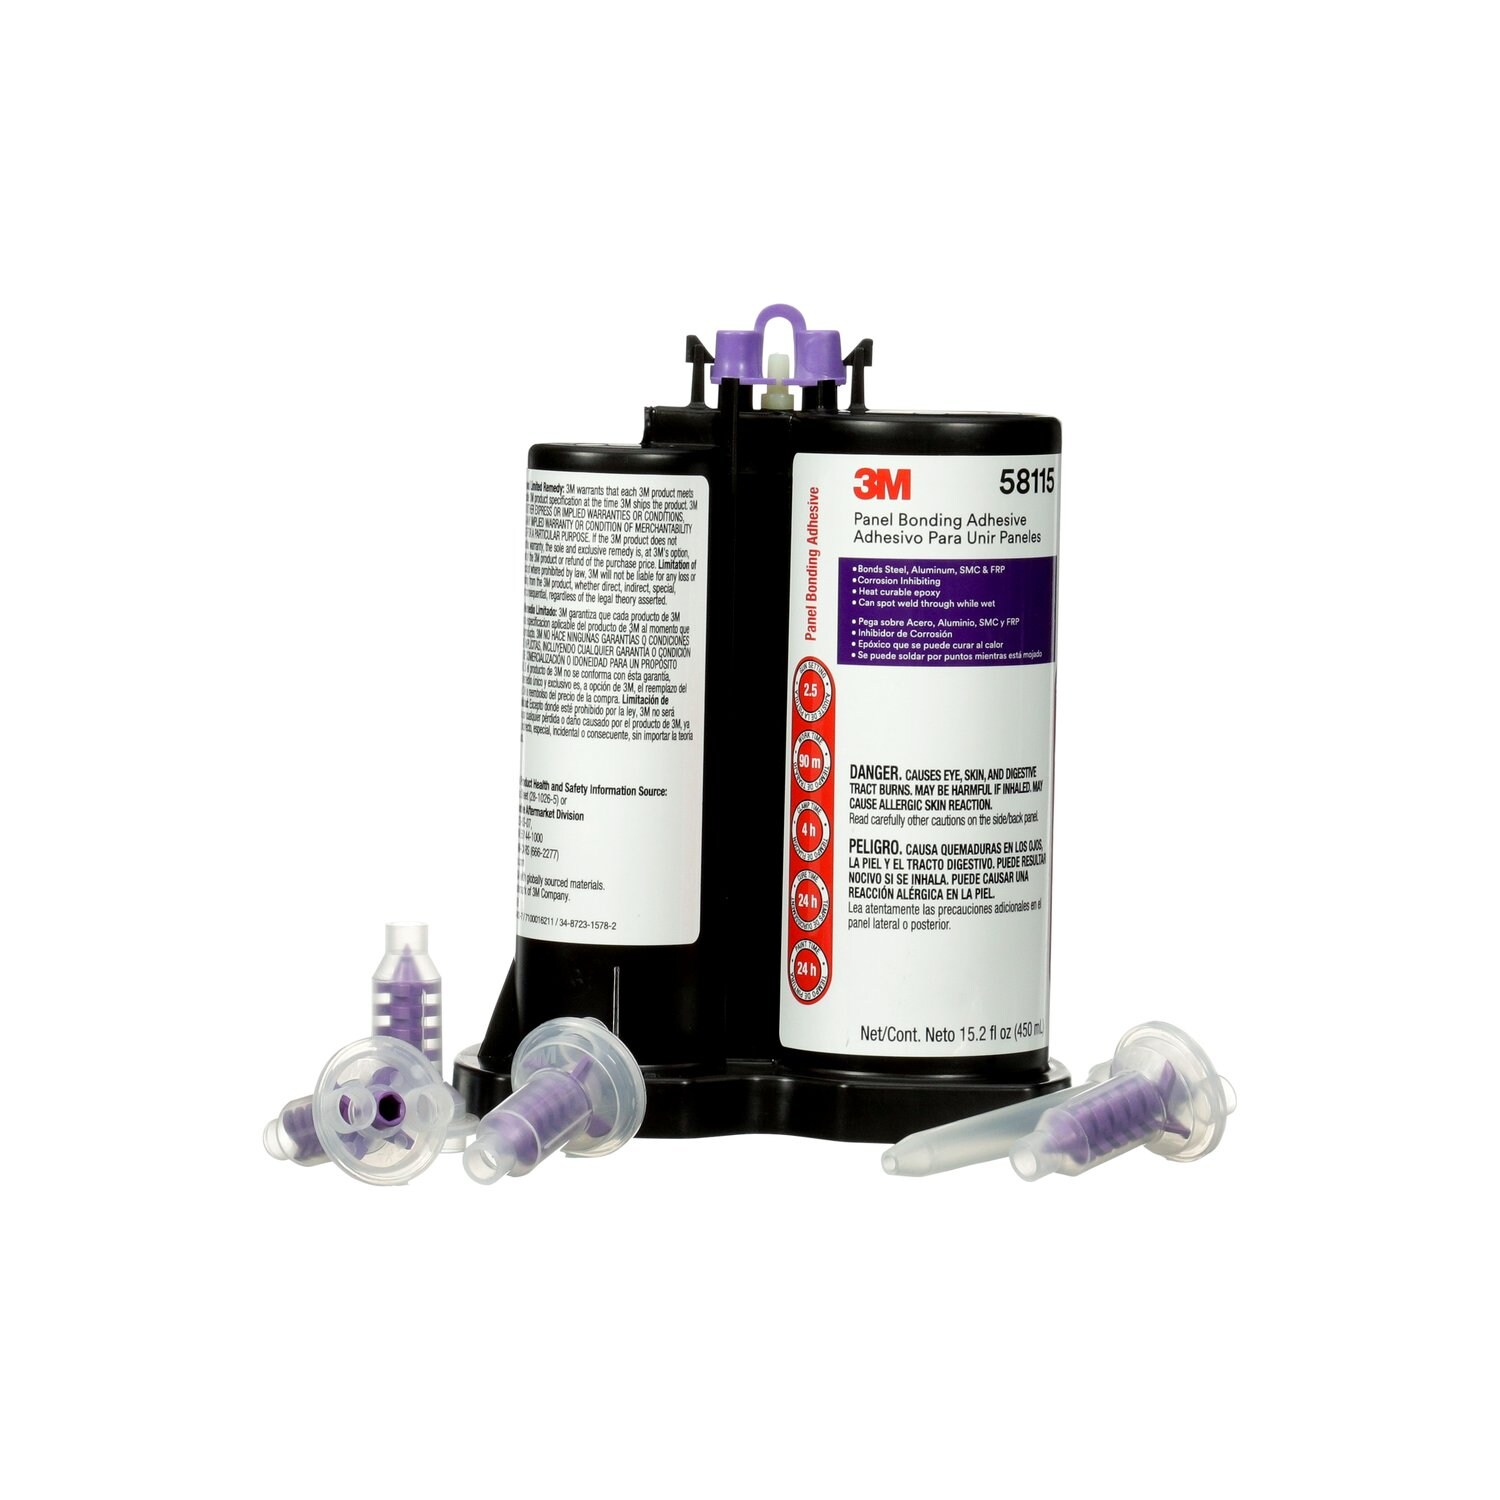 Elastic Sealant: 50 mL Tube, Purple, Polyurethane